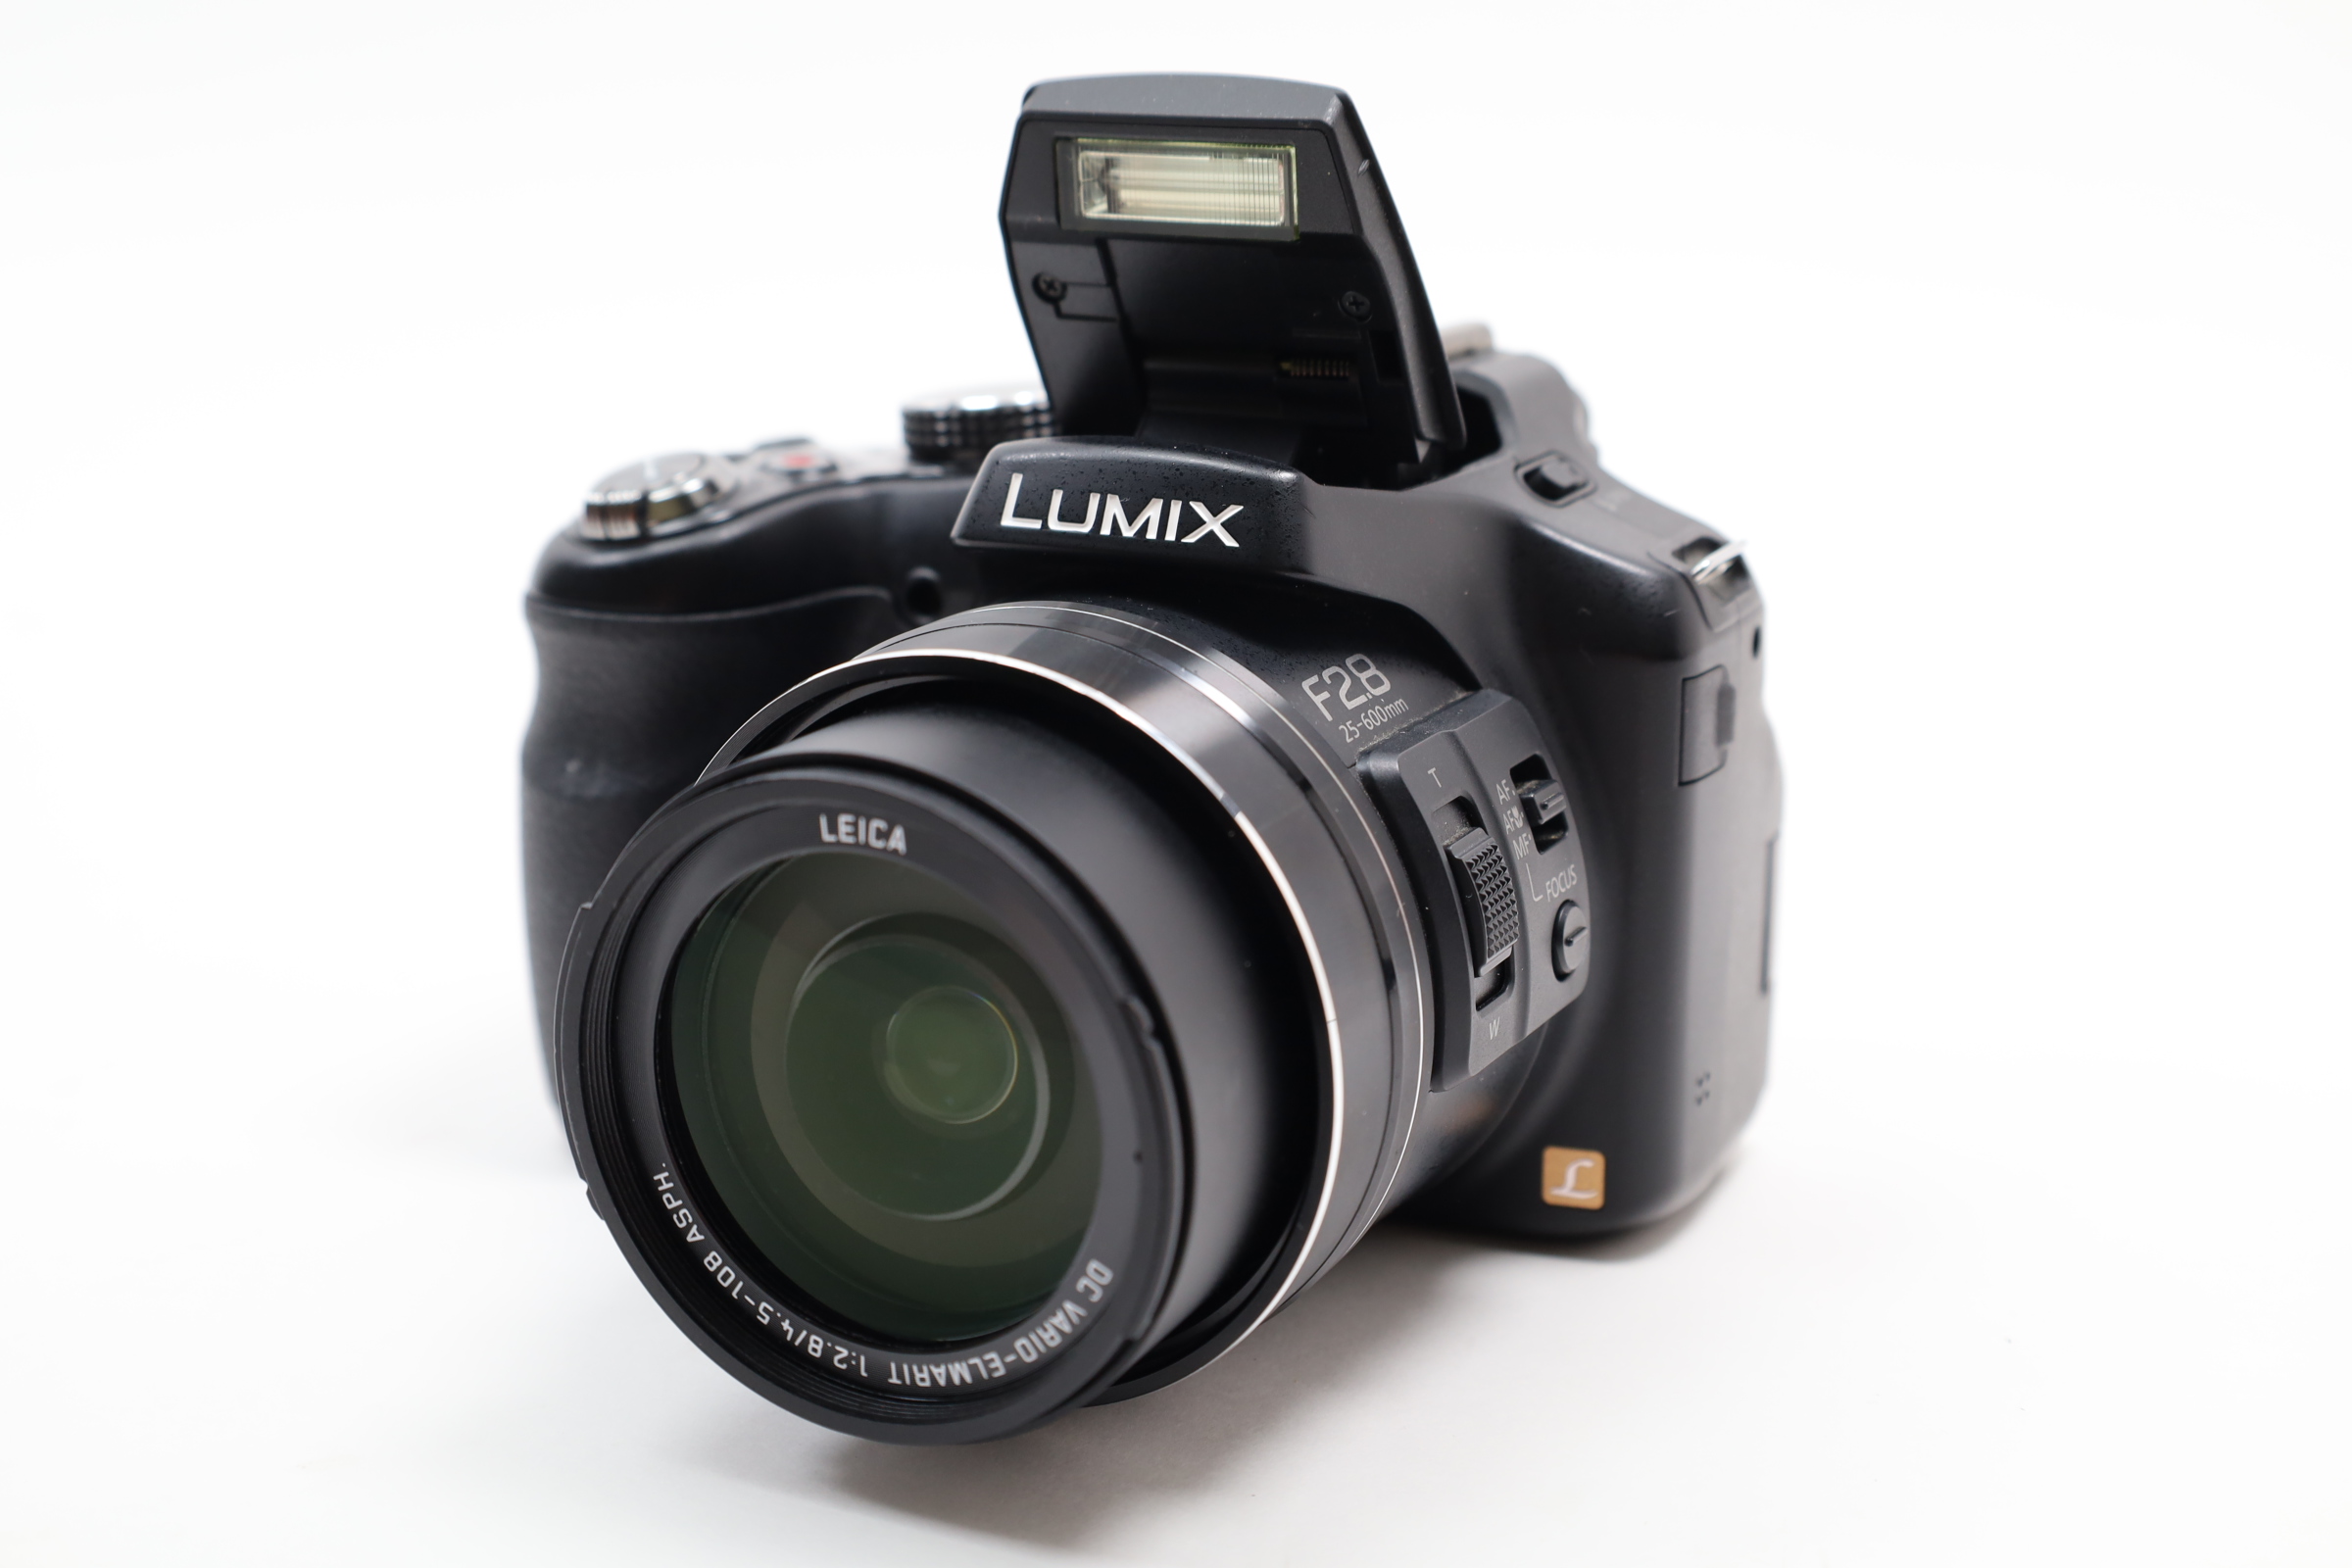 Panasonic Lumix DMC-FZ200 12.1 Megapixel Bridge Camera, Black 